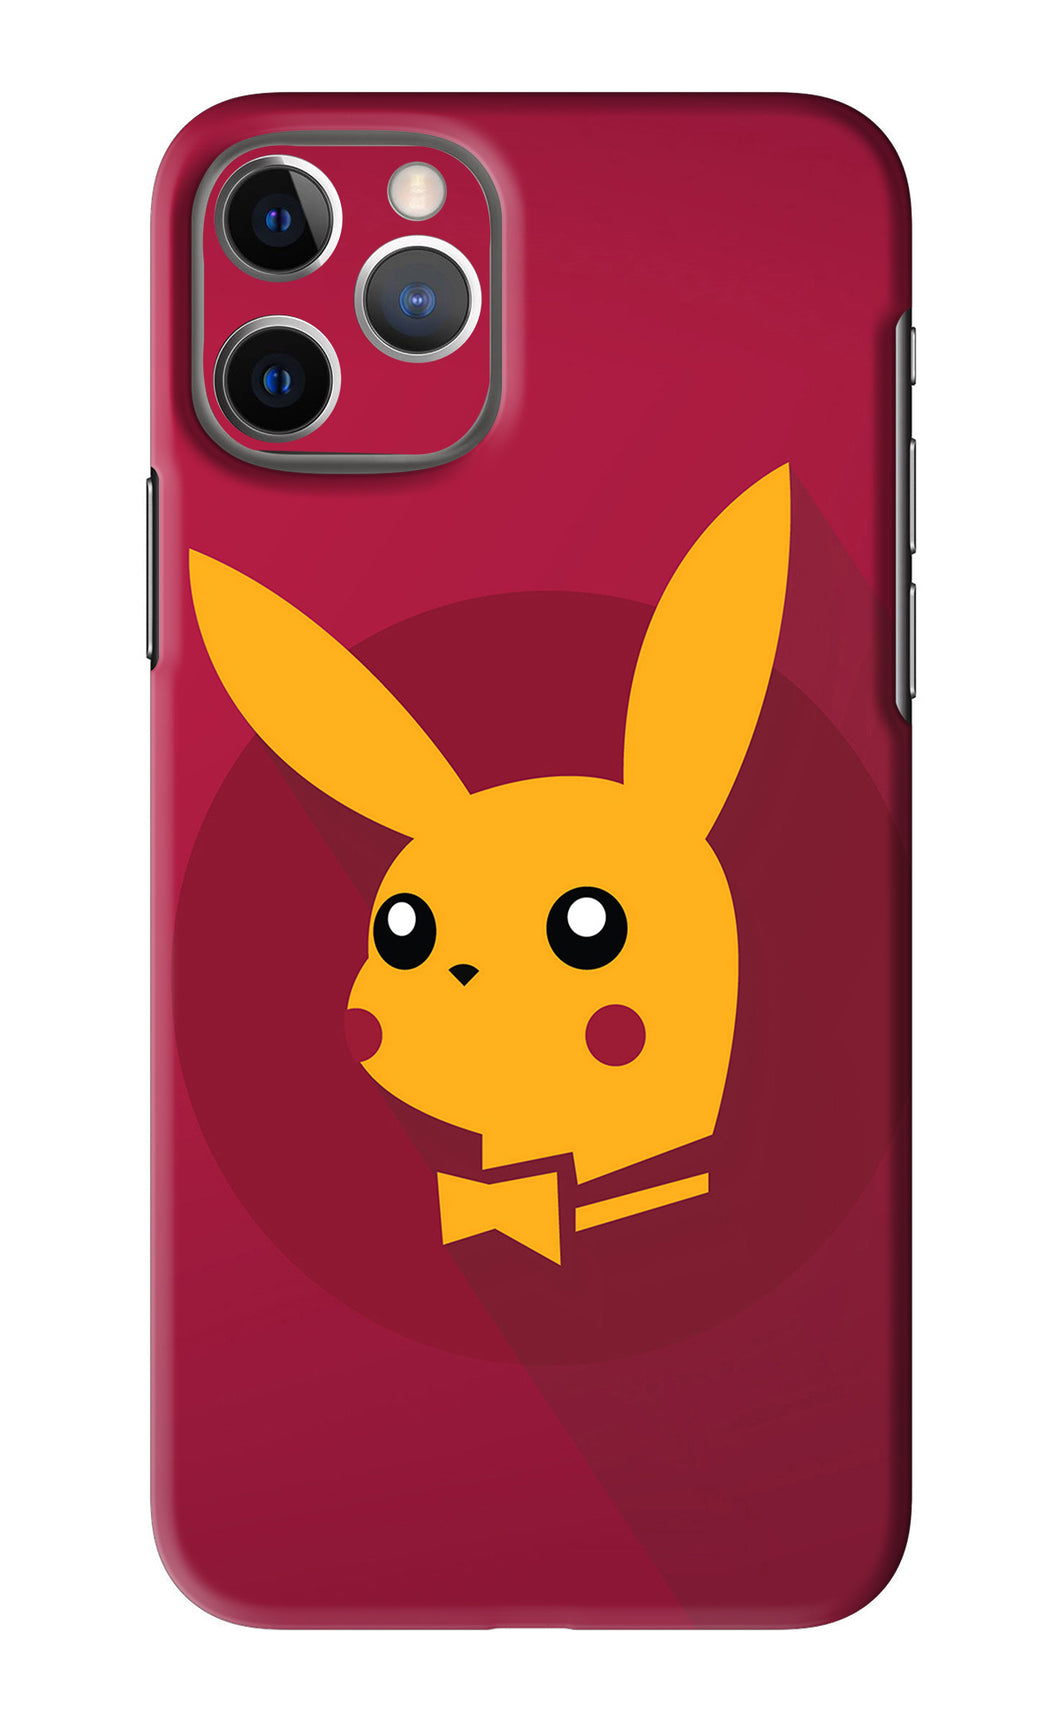 Pikachu iPhone 11 Pro Max Back Skin Wrap